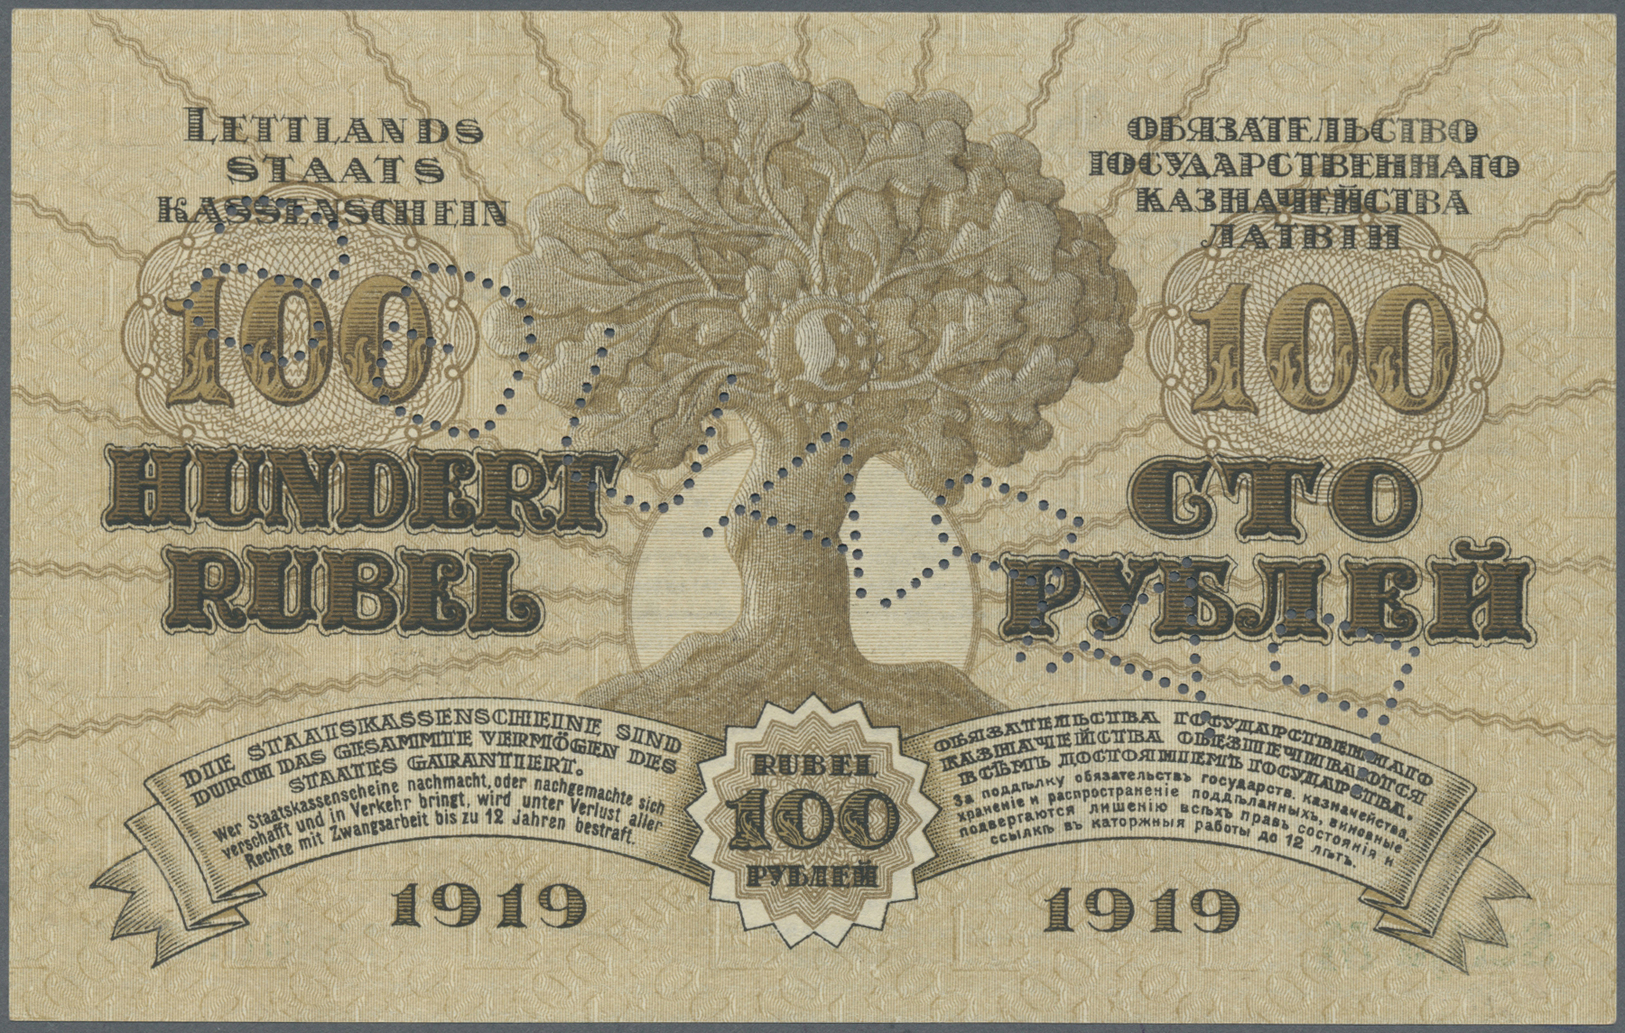 01425 Latvia / Lettland: 100 Rubli 1919 Specimen P. 7es, Series "M", Zero Serial Numbers, Sign. Kalnings, PARAUGS Perfor - Latvia